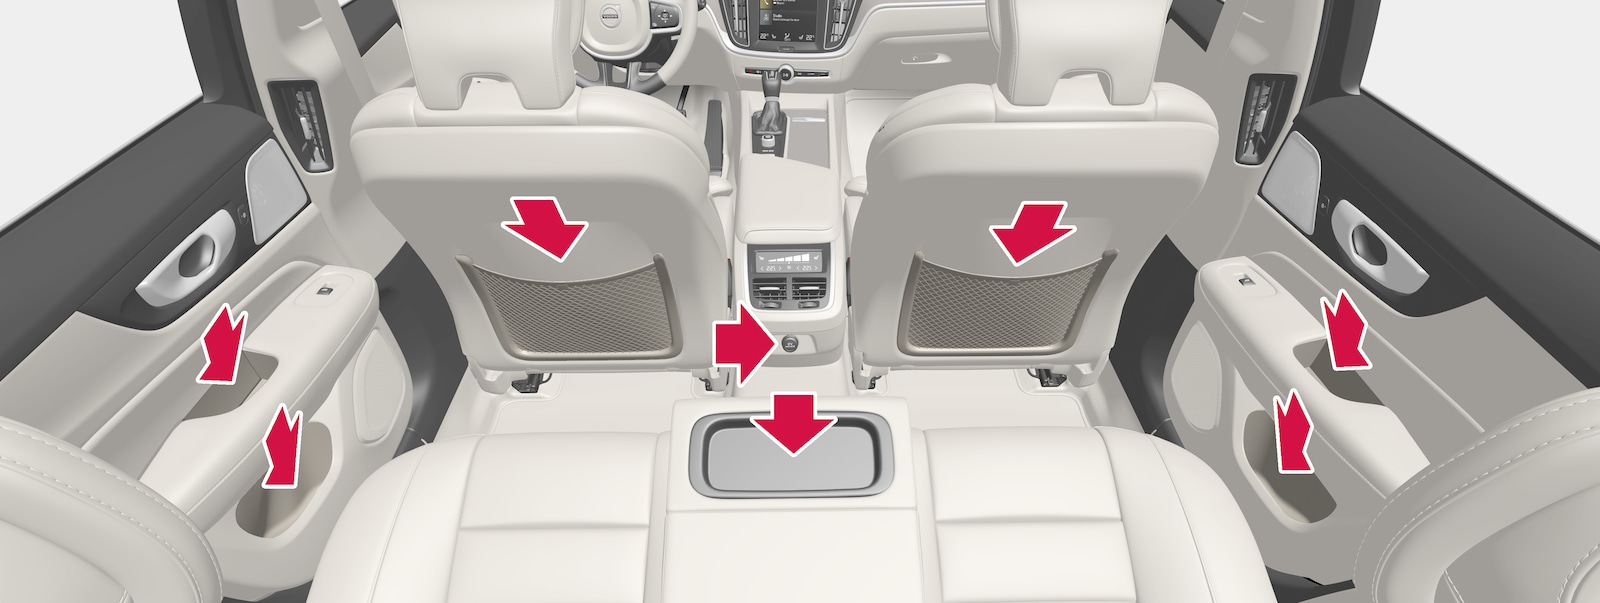 P5-1817-S/V60-Interior storage, back seat